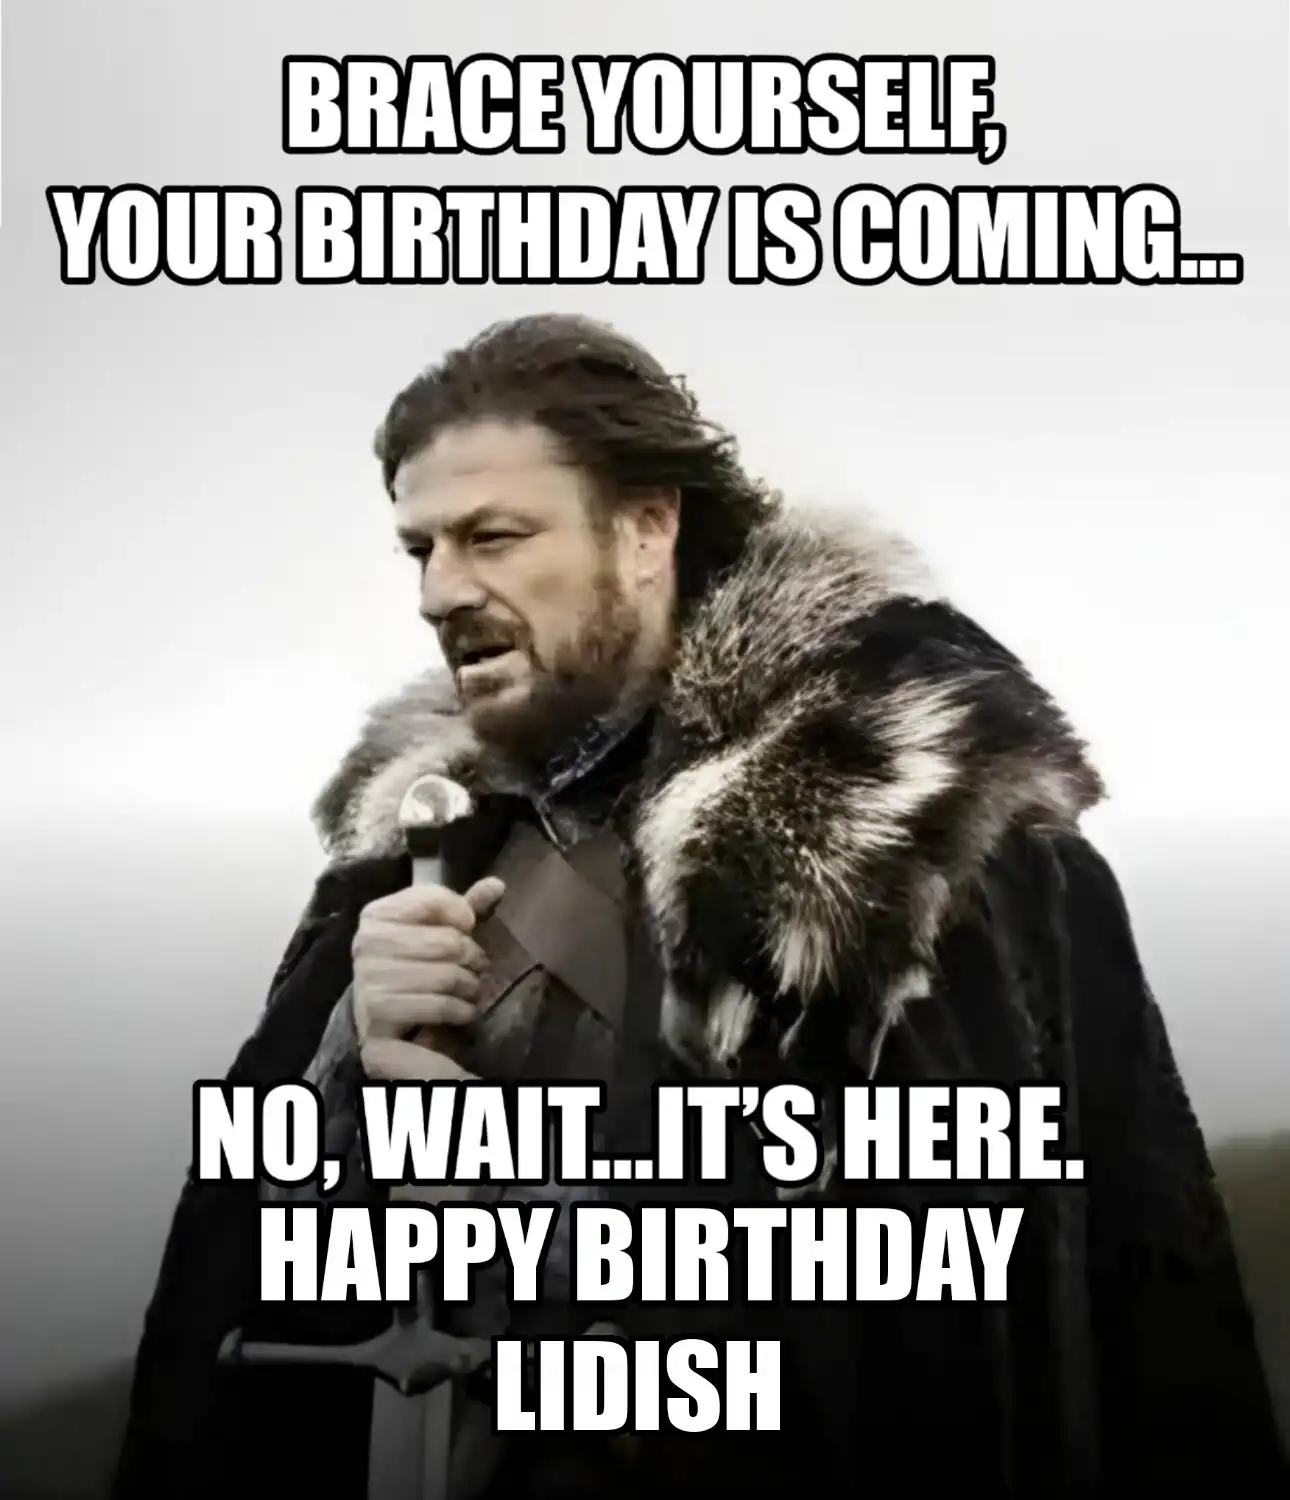 Happy Birthday Lidish Brace Yourself Your Birthday Is Coming Meme